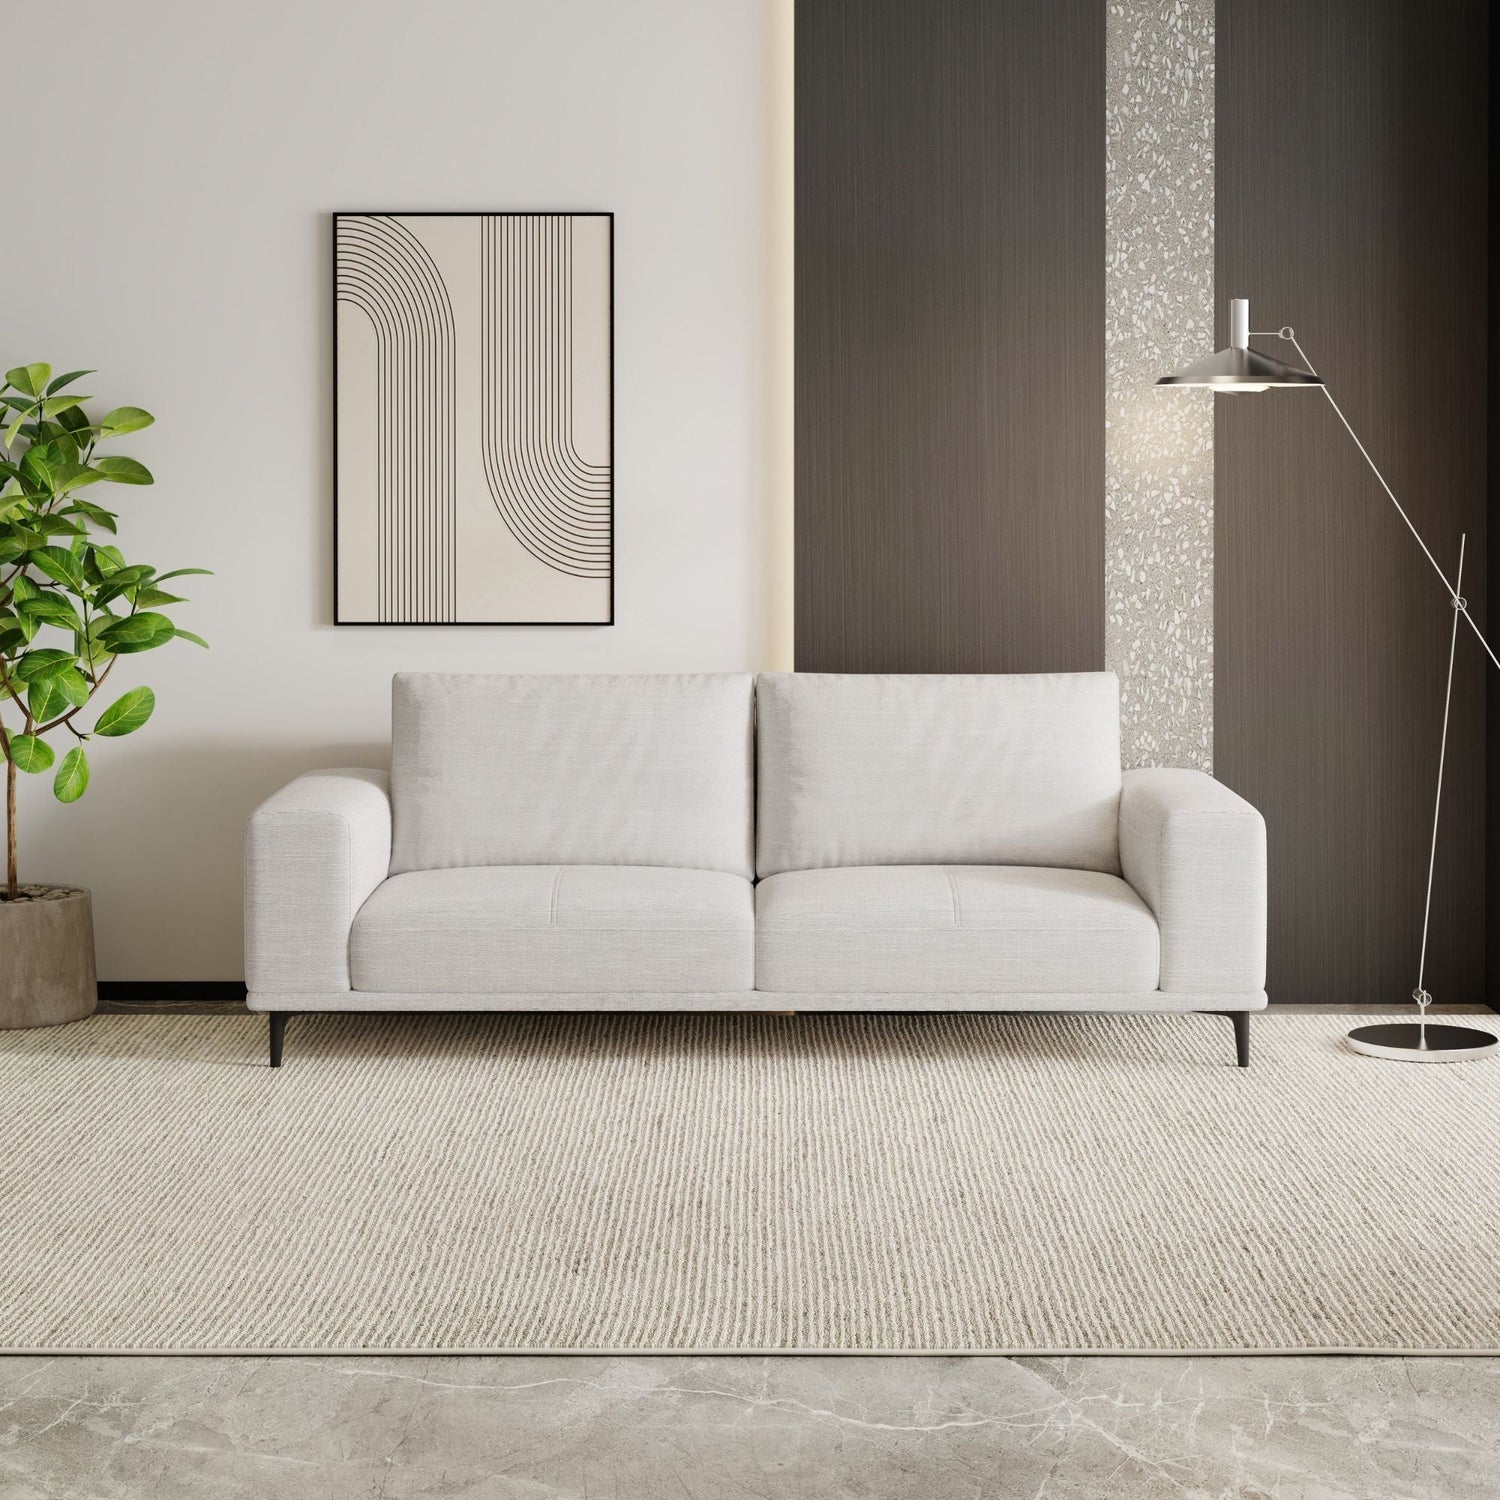 Calm white fabric sofa in living room